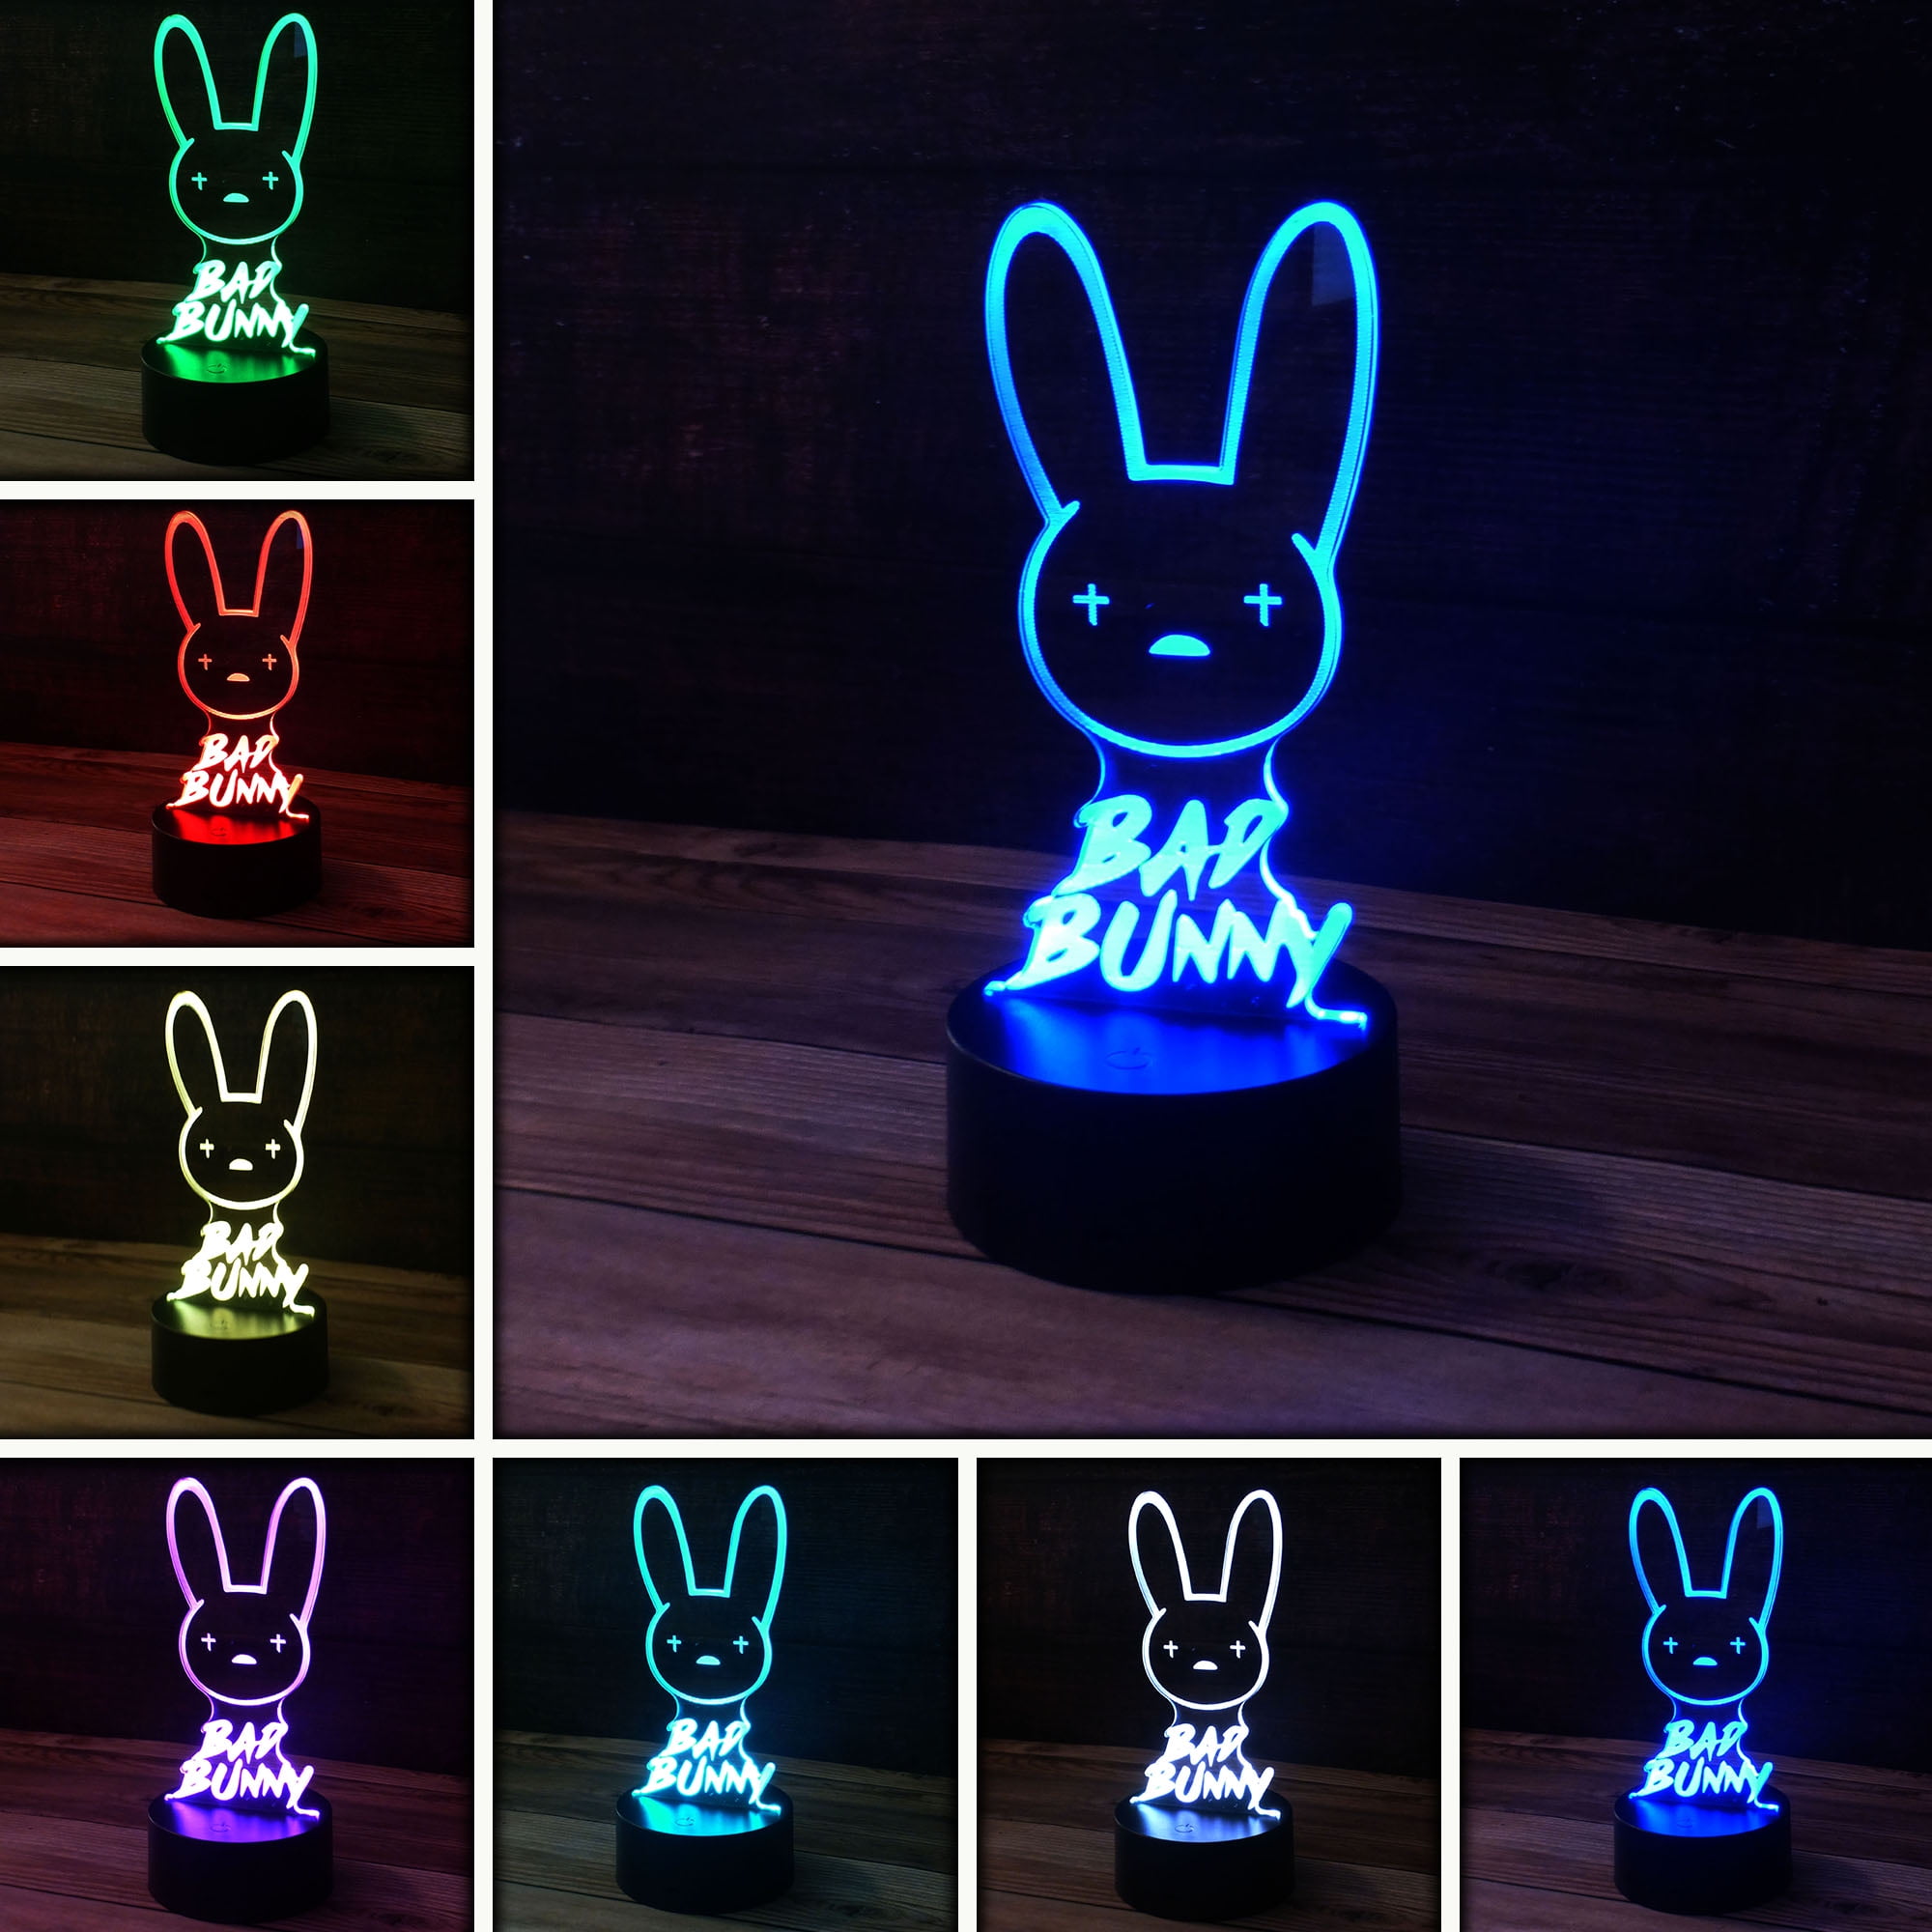 Bad Bunny Logo 3D LED Illusion Lamp